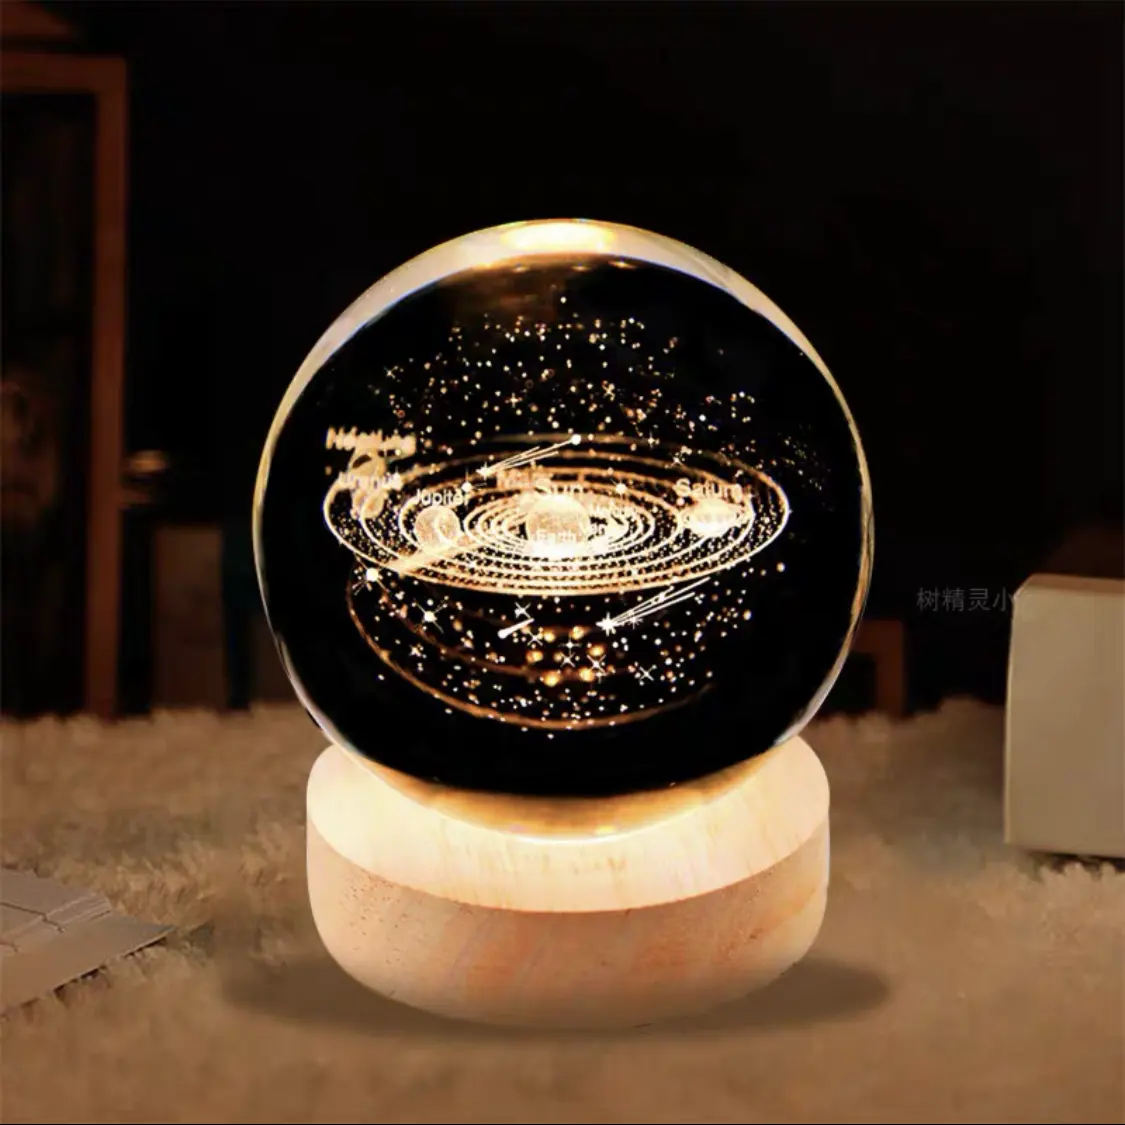 Grabado láser creativo 3D imagen de vidrio regalo escultura recuerdo decoración del hogar Luna bola de cristal lámpara Led soporte de madera ornamento